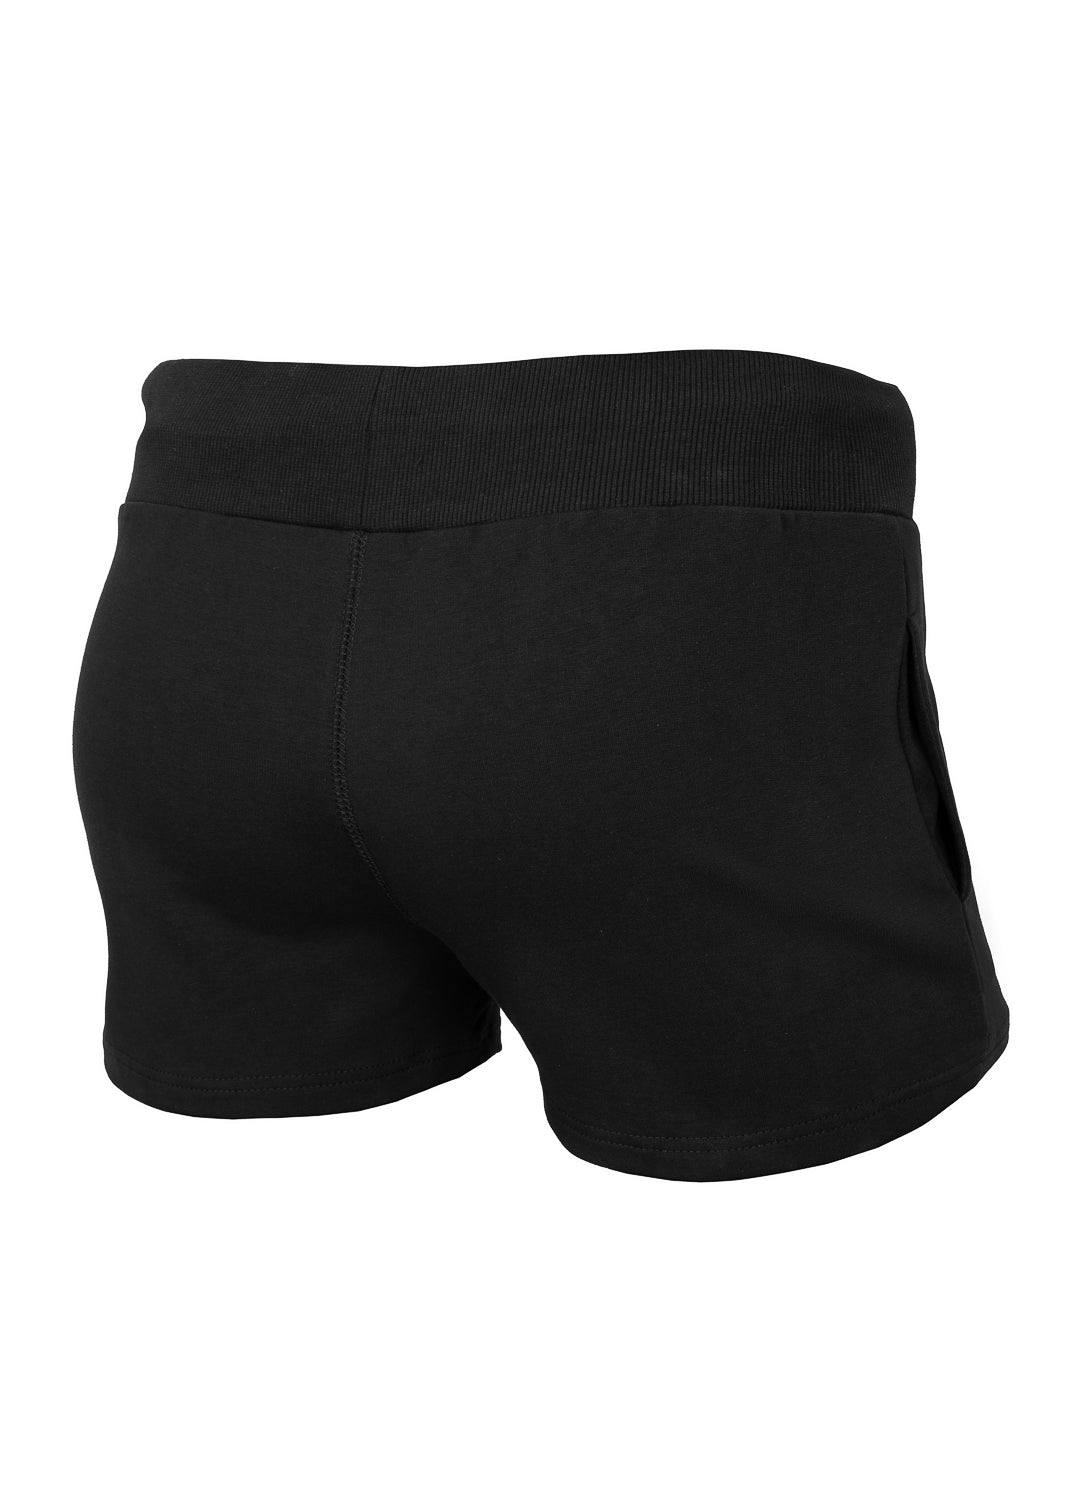 Women&#39;s shorts MARIPOSA French Terry Black - Pitbull West Coast International Store 